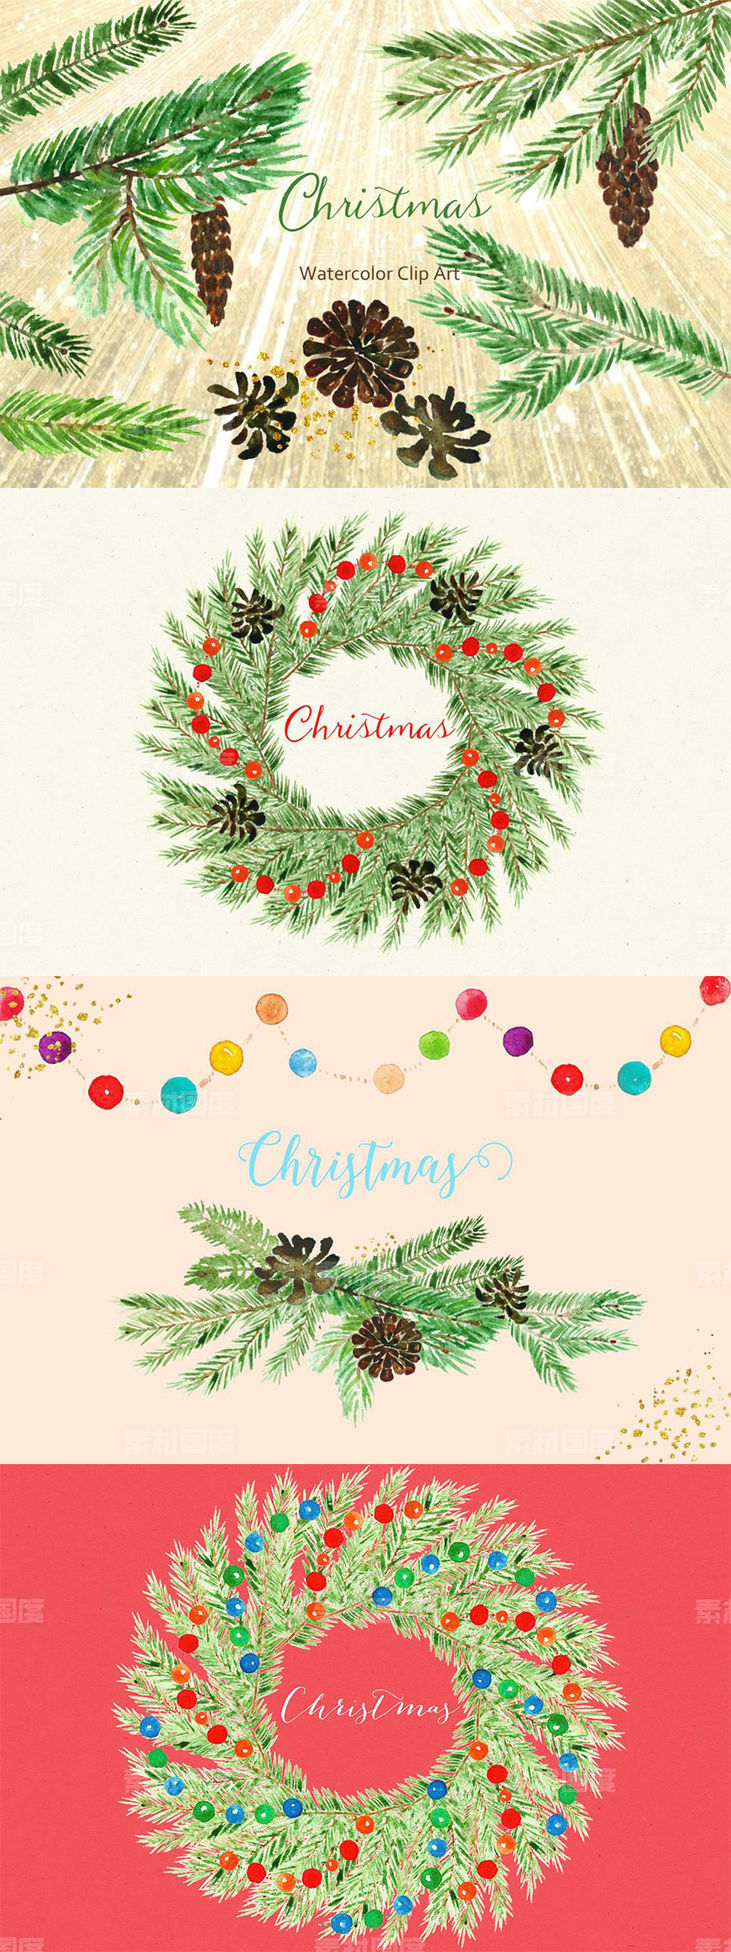 水彩手绘圣诞树剪贴画套装 Christmas tree. Watercolor Clipart